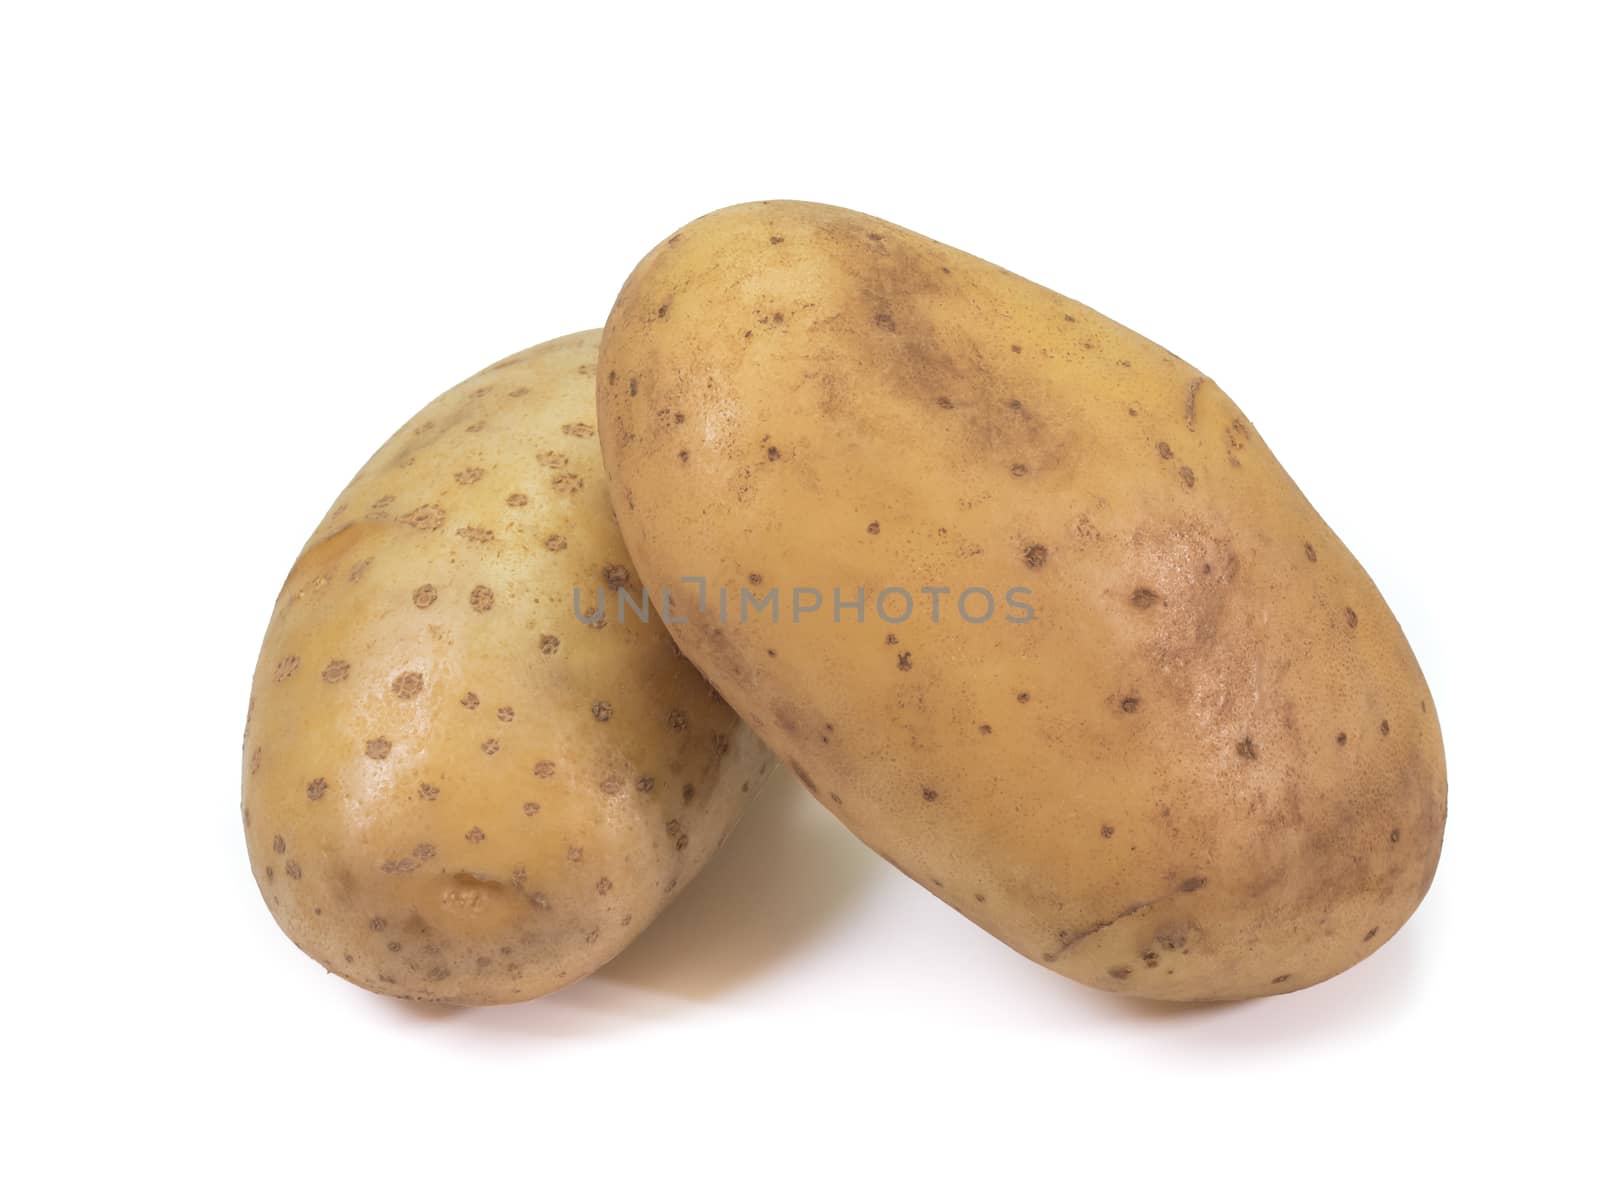 The close up of fresh organic potato vegetable on white background.